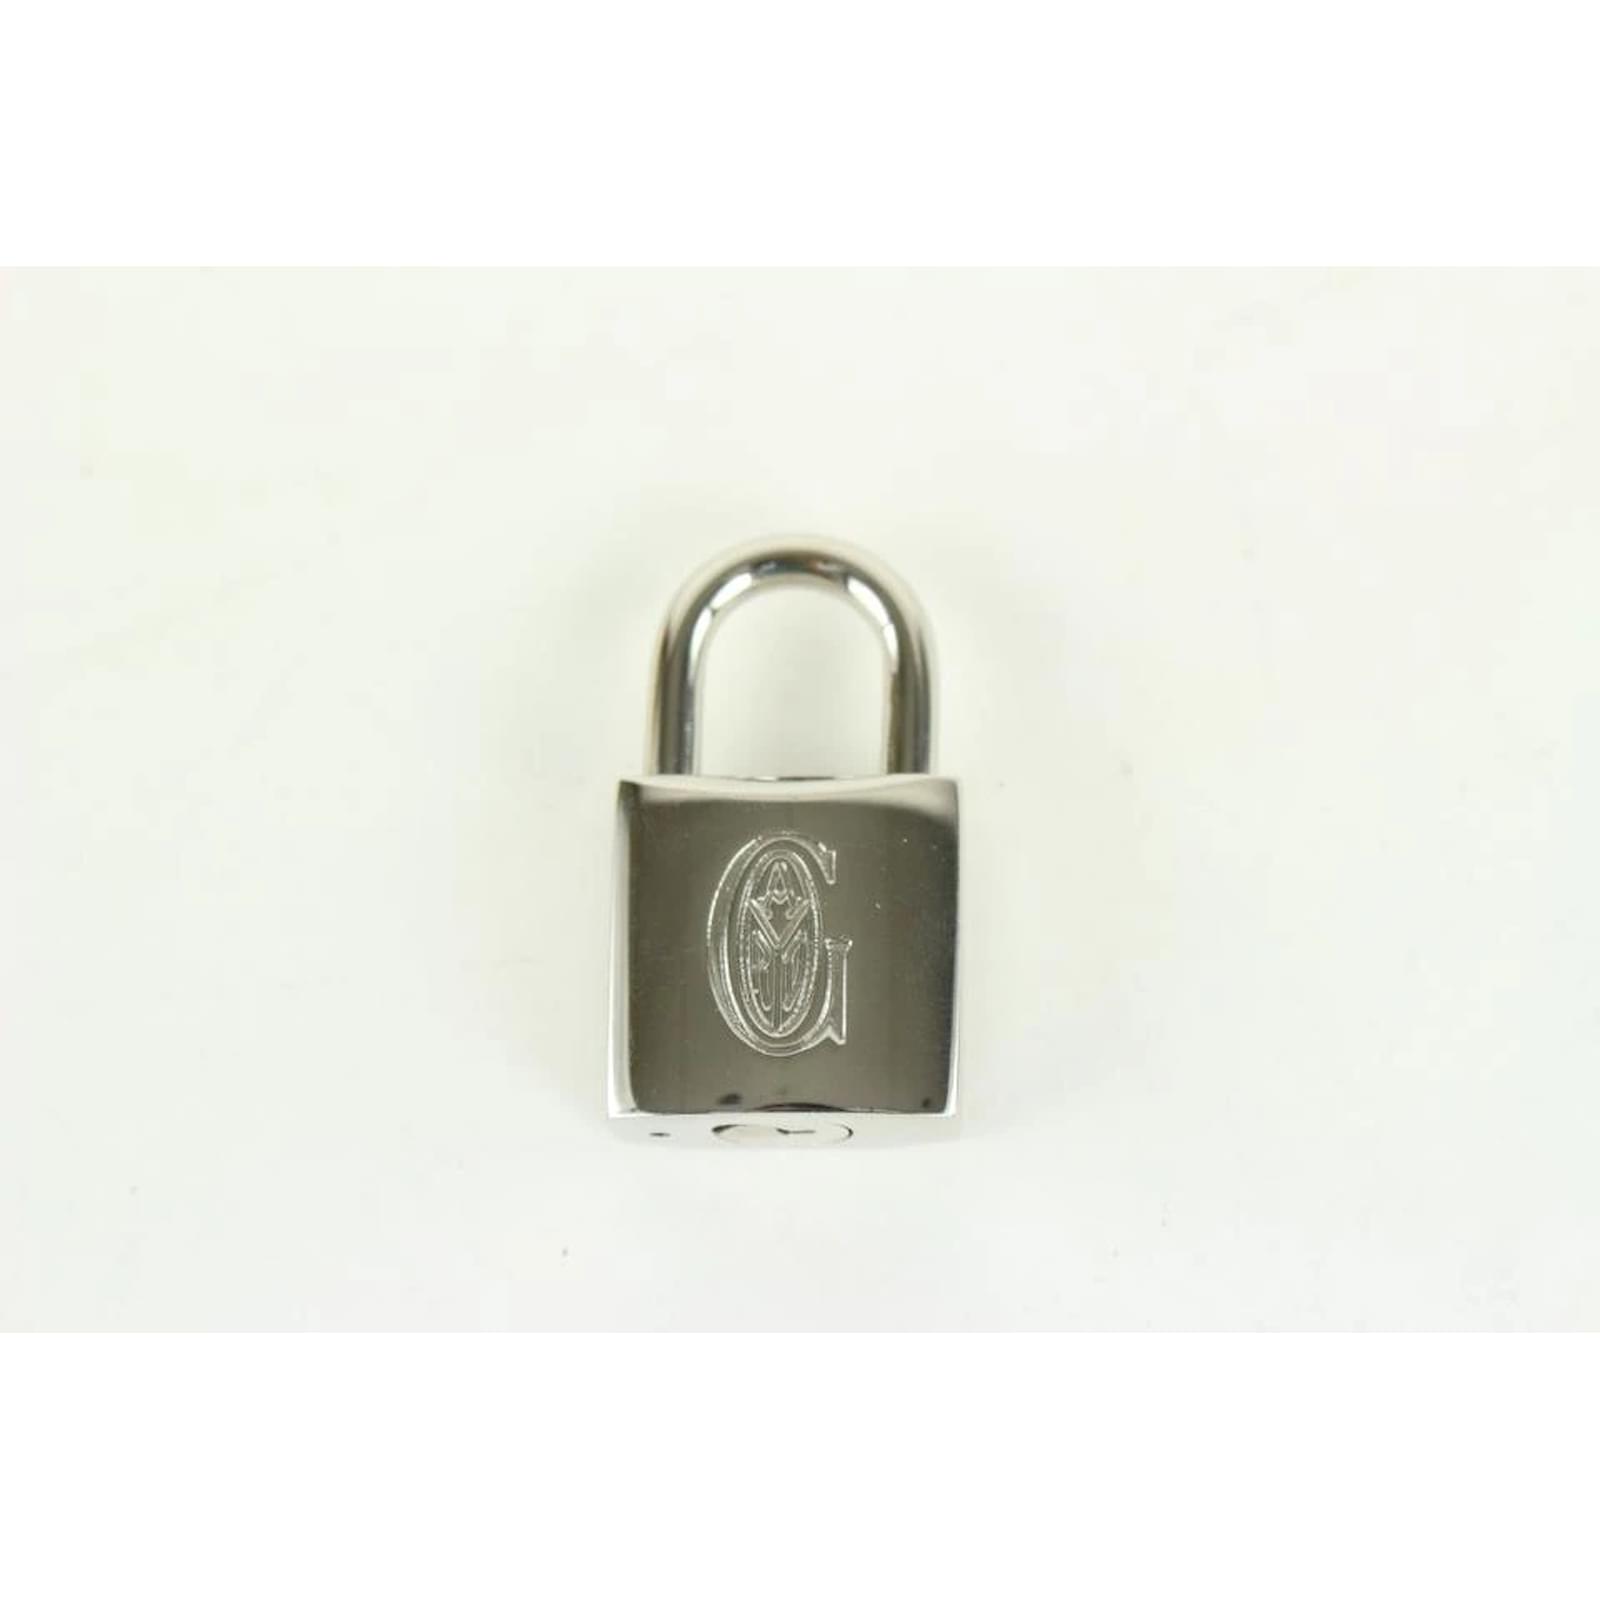 Gucci Brace G Logo Lock and Key Set Cadena Bag Charm Padlock